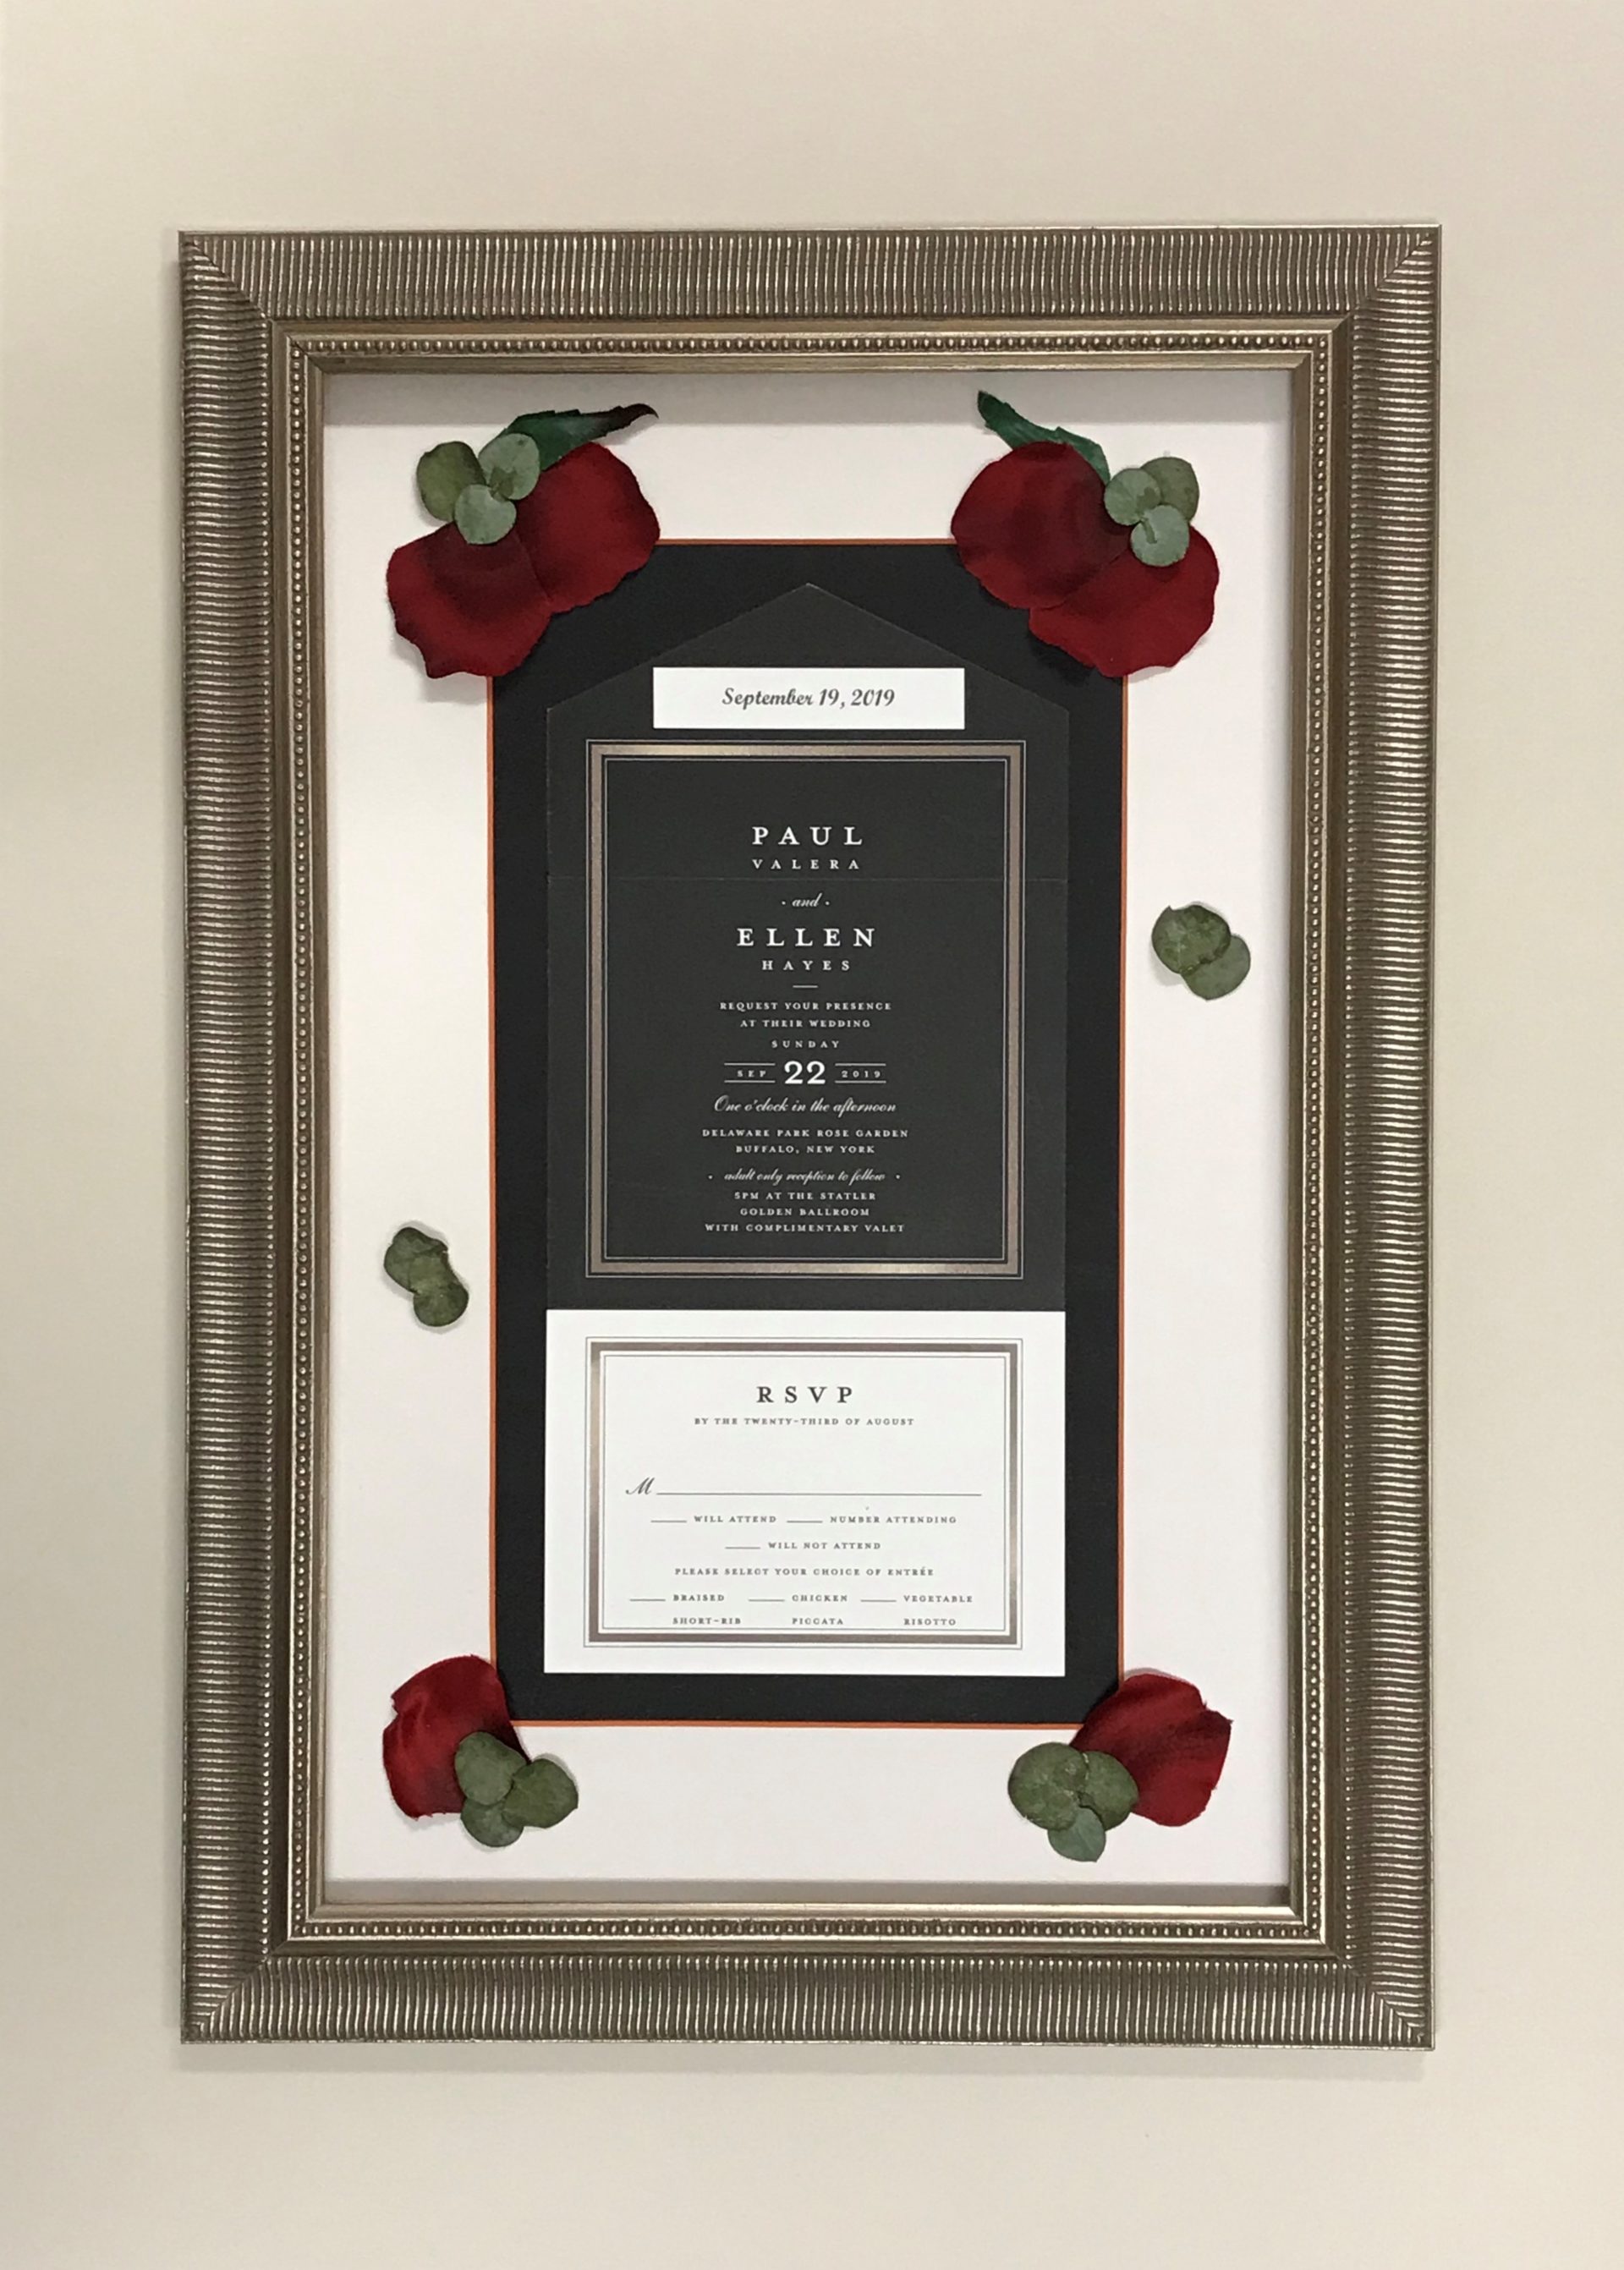 Wedding invitation with silk floral enhancements.